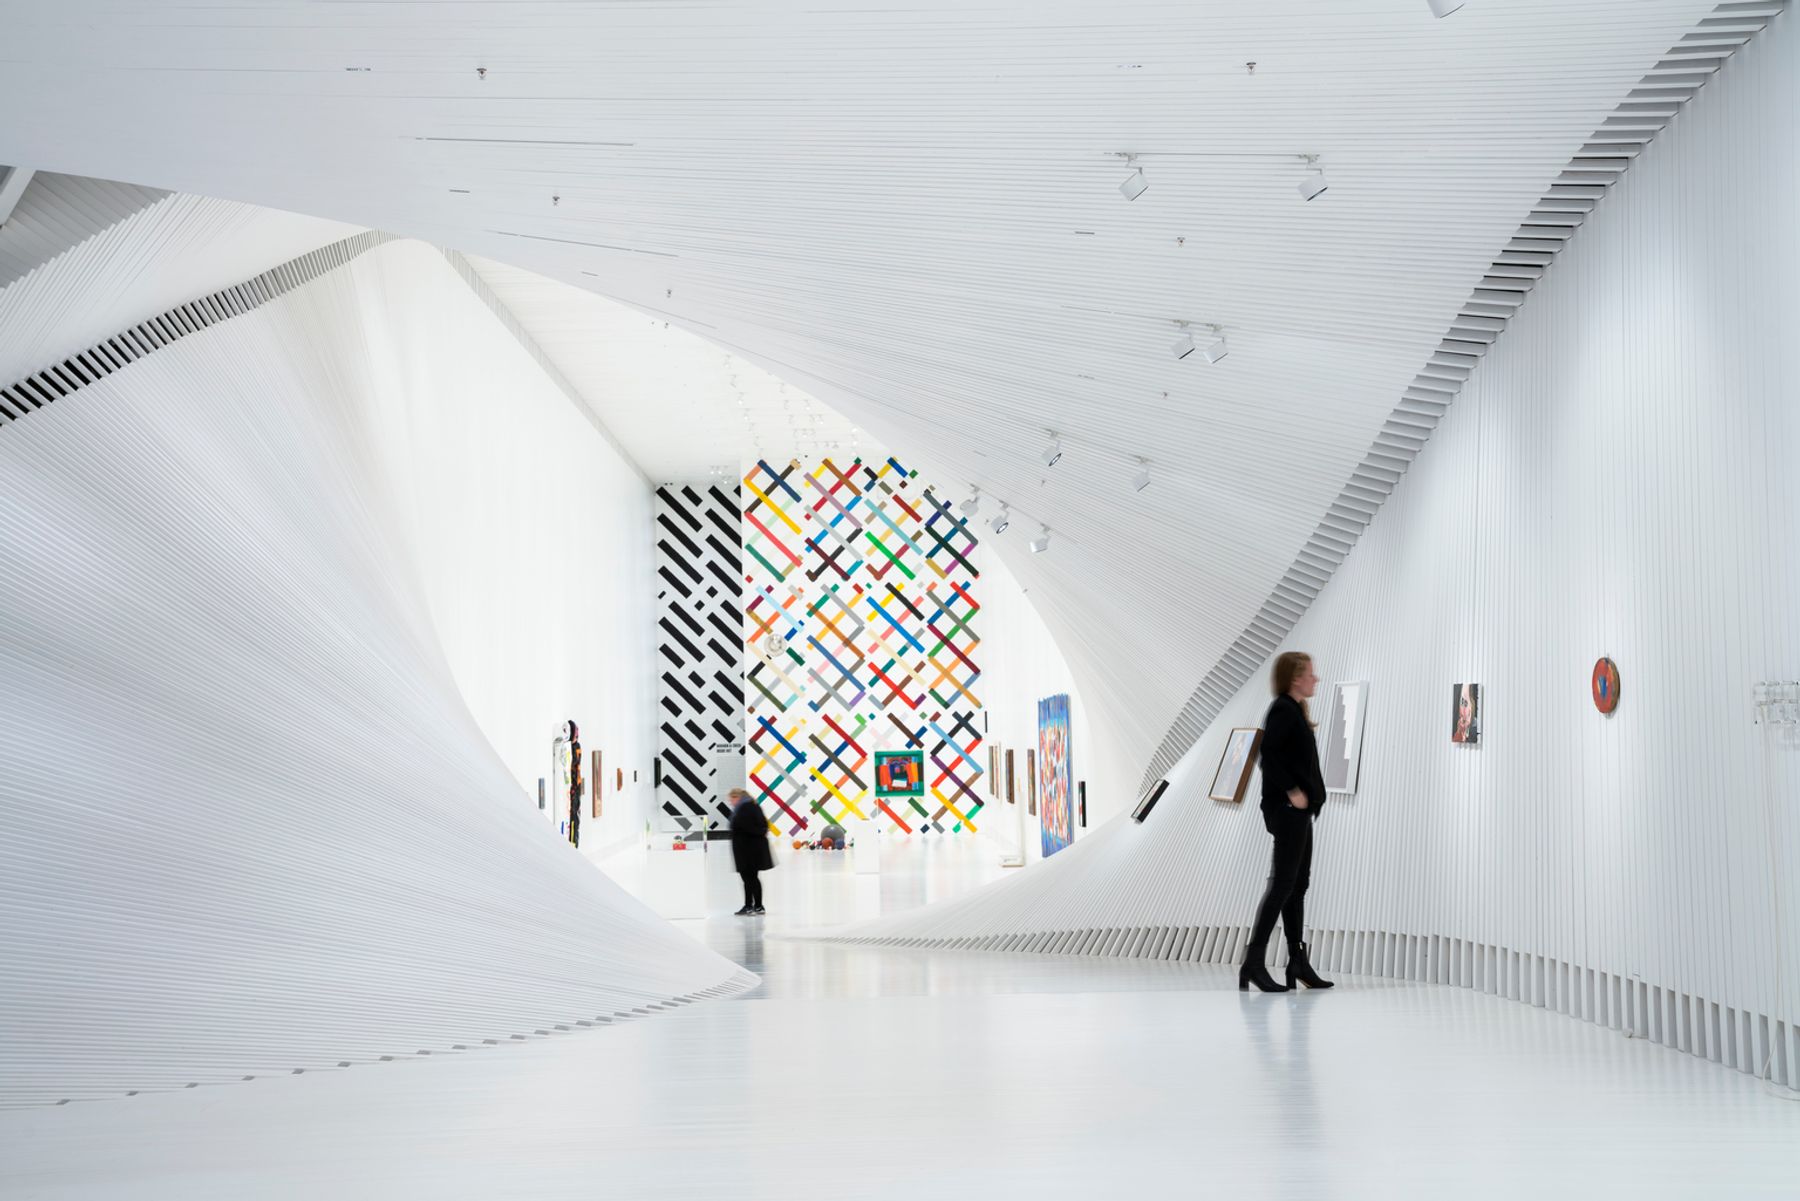 The Twist at Kistefos, Jevnaker. Architecture : BIG Bjarke Ingels Group, Copenhague. Conception lumière : Light Bureau, Oslo. Photographie : Tomasz Majewski, Oslo.